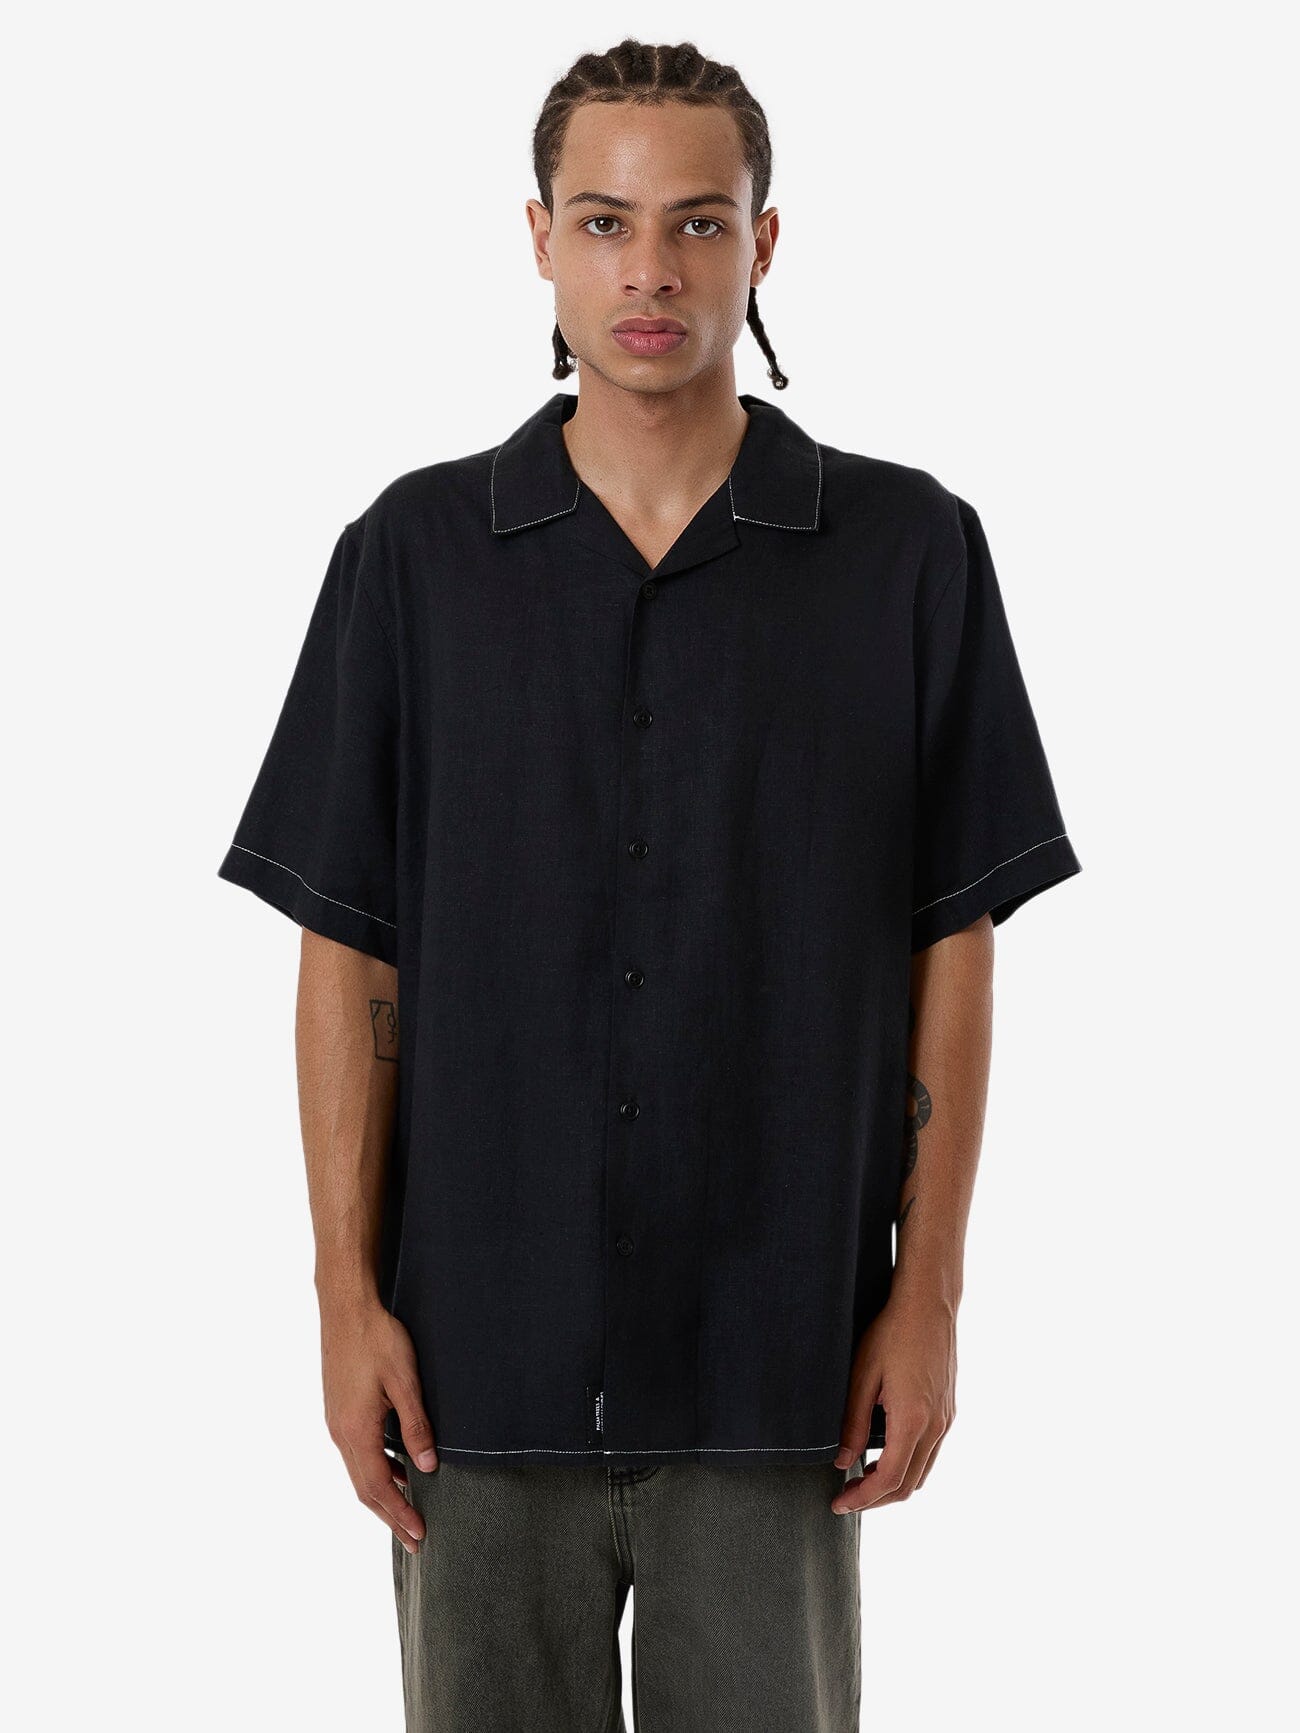 Hemp Minimal Thrills Contrast Stitch Bowling Shirt - Black XS